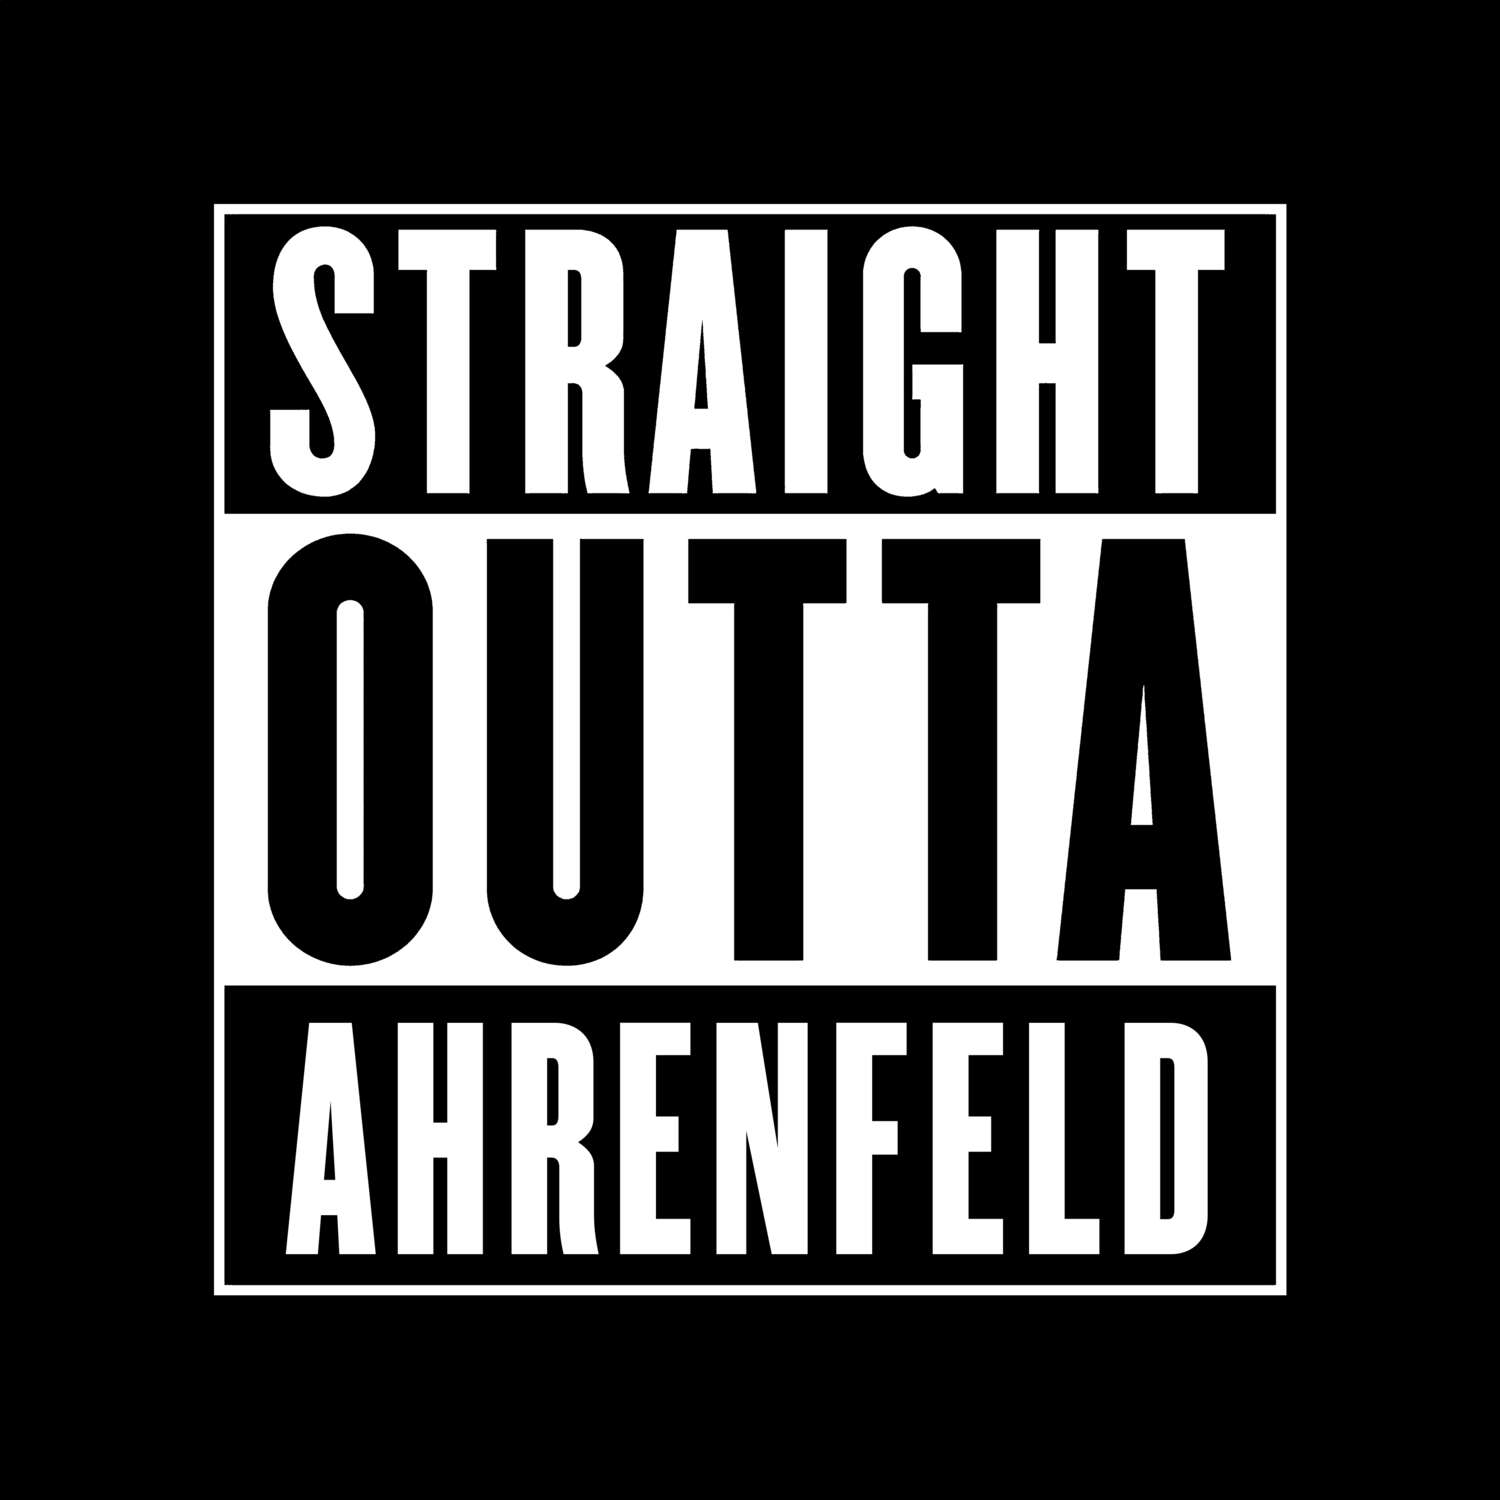 Ahrenfeld T-Shirt »Straight Outta«